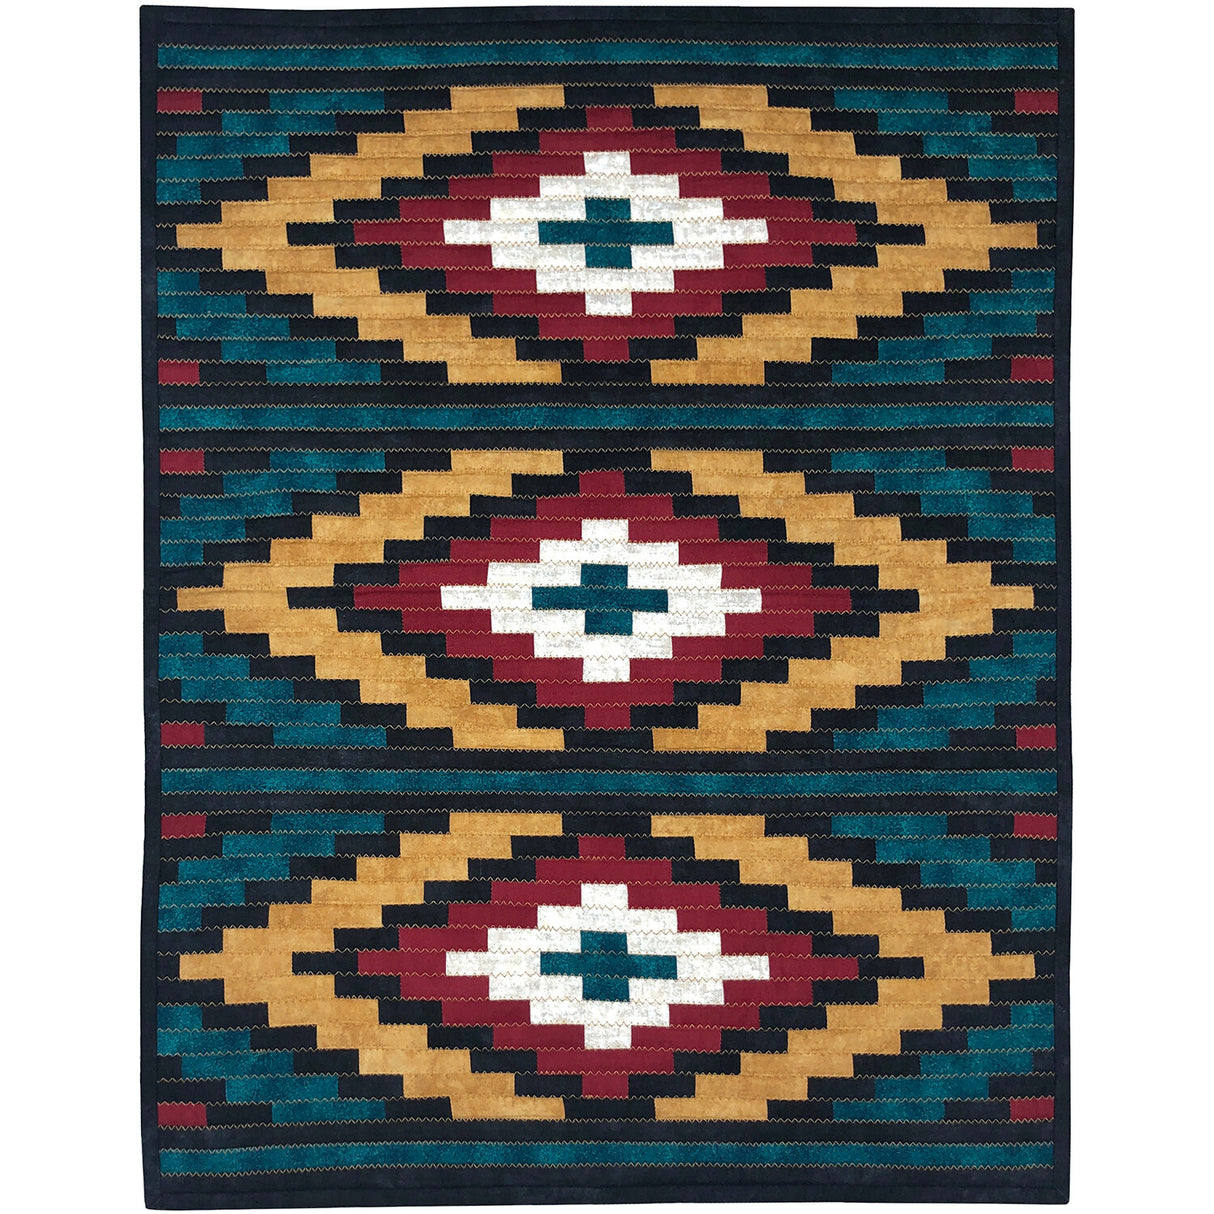 Spanish Textile Quilt Pattern by J Michelle Watts Designs